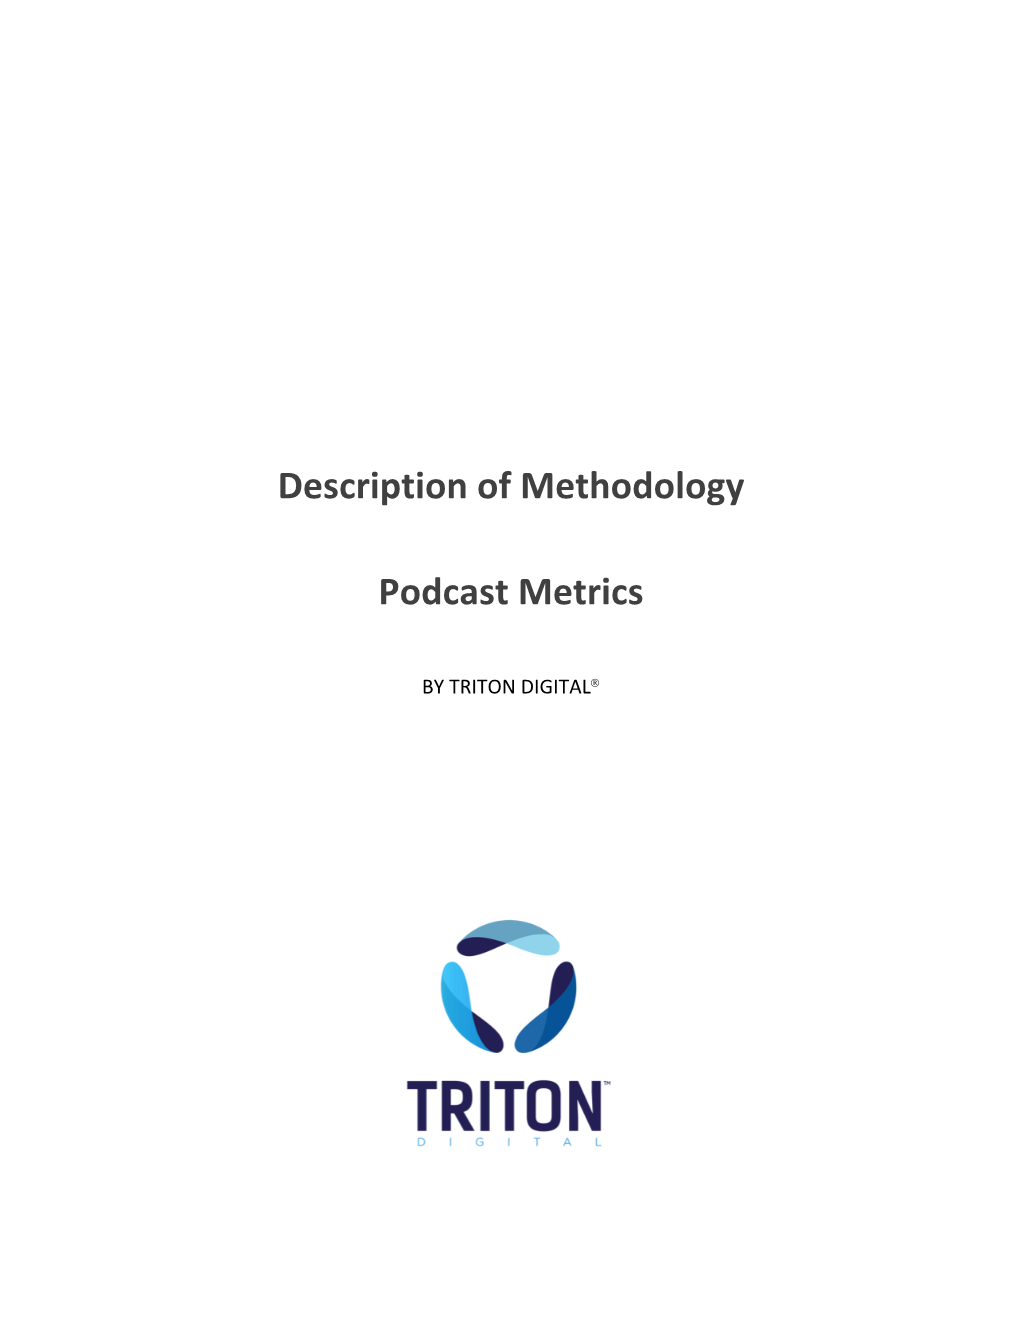 Description of Methodology Podcast Metrics